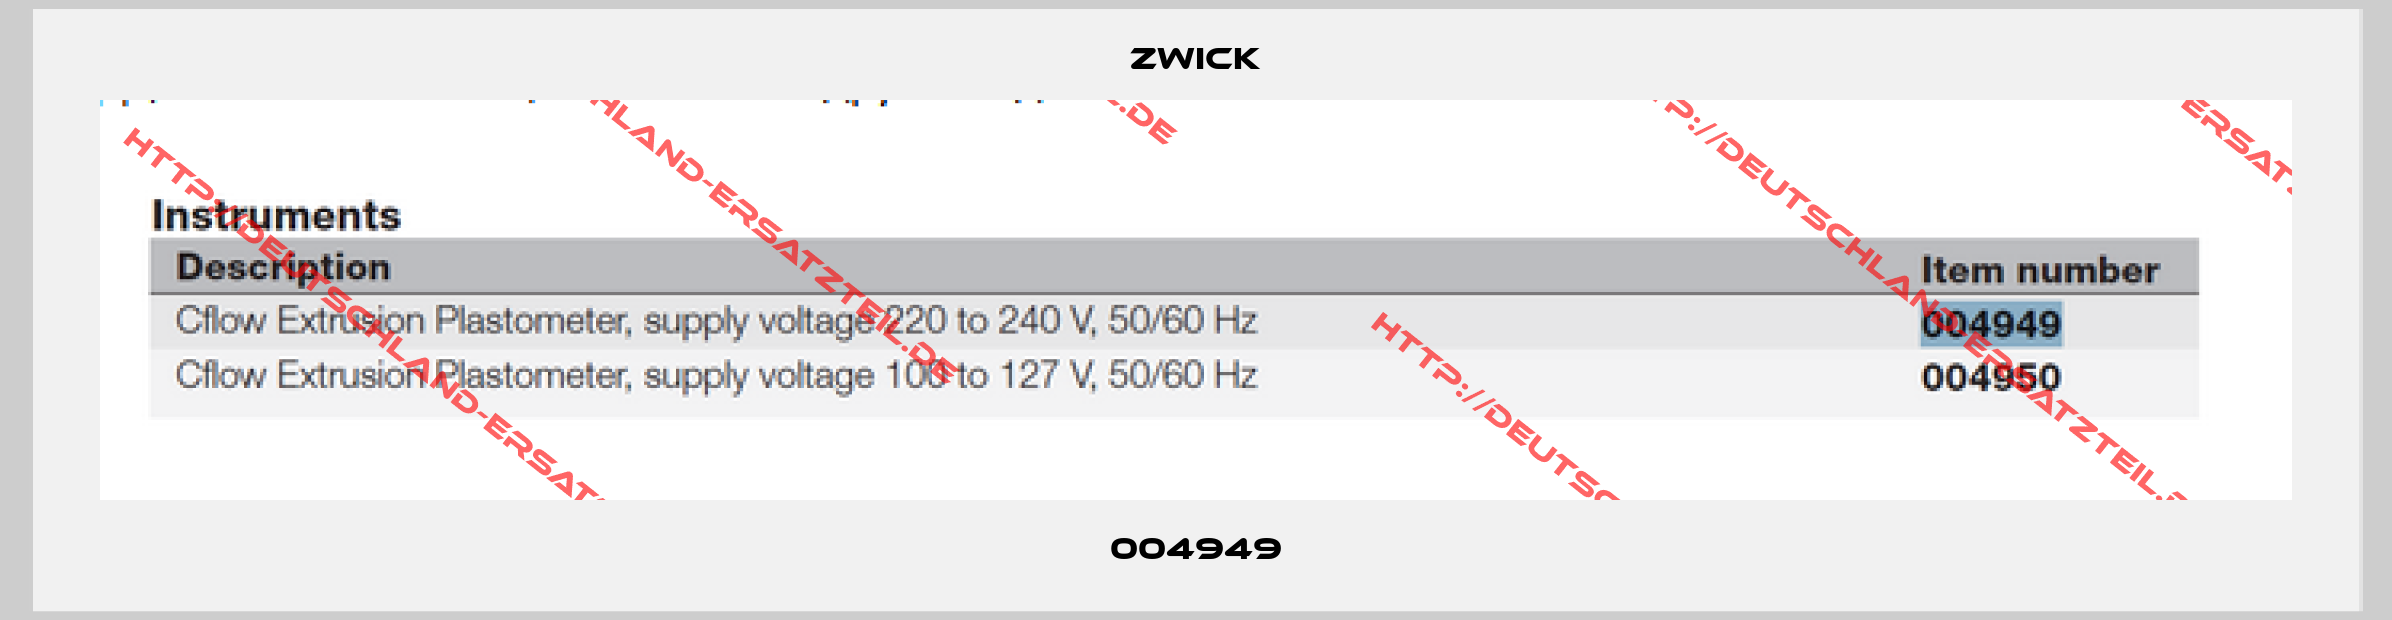 Zwick-004949